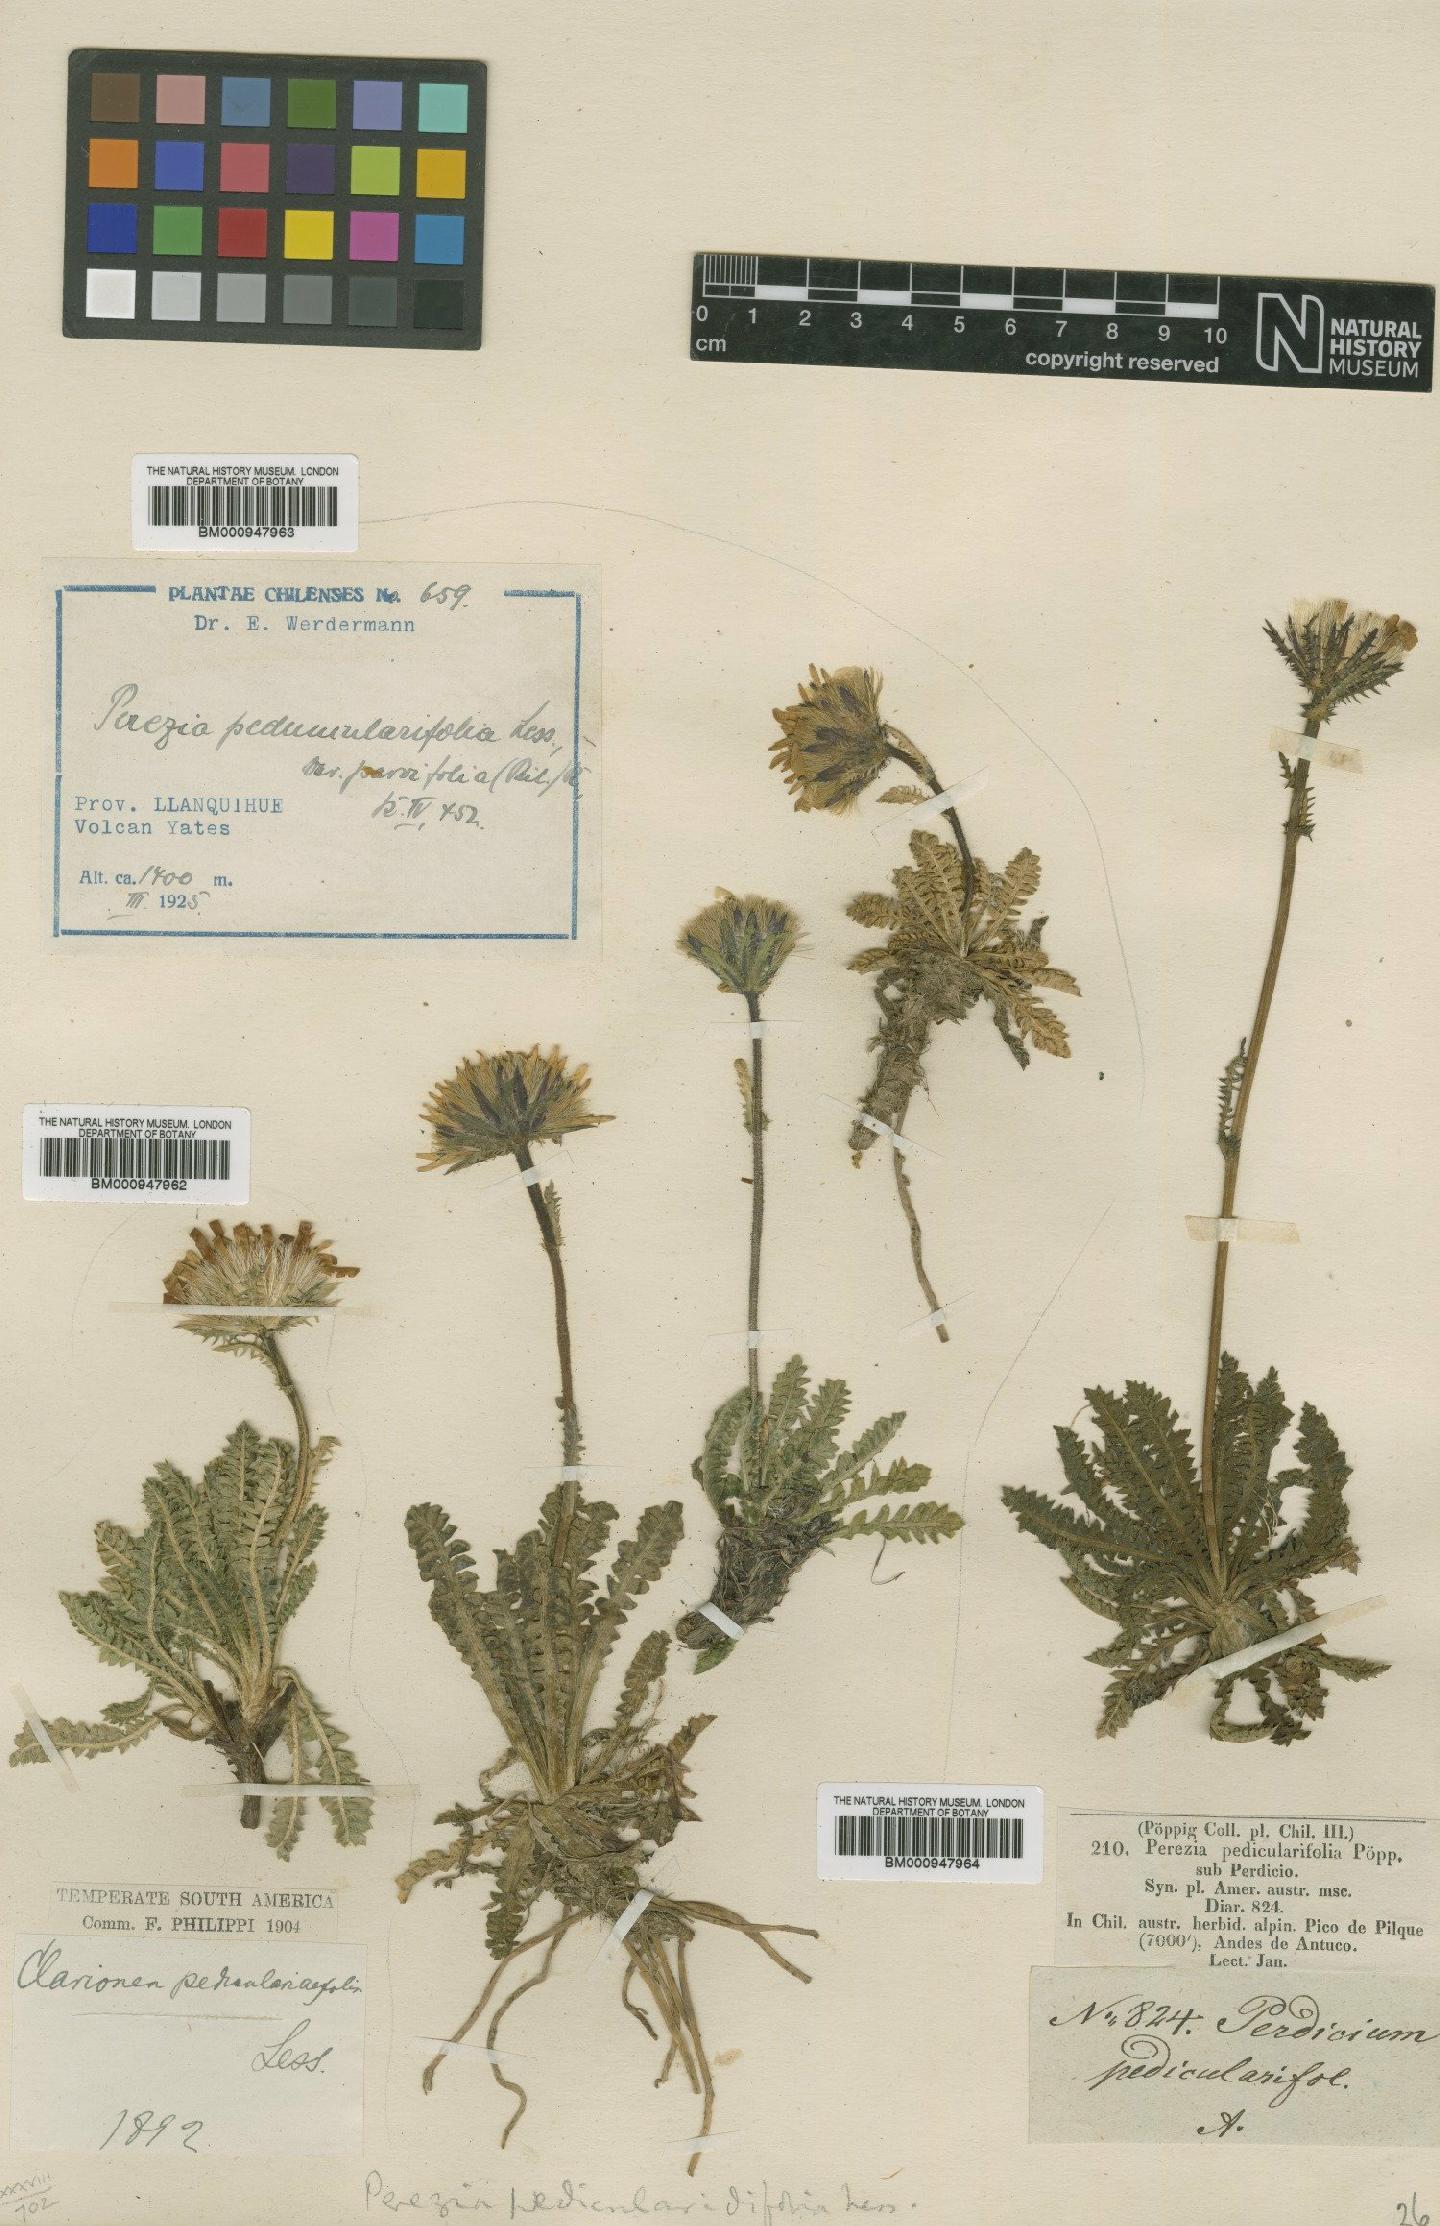 To NHMUK collection (Perezia pedicularidifolia Less.; Type; NHMUK:ecatalogue:620508)